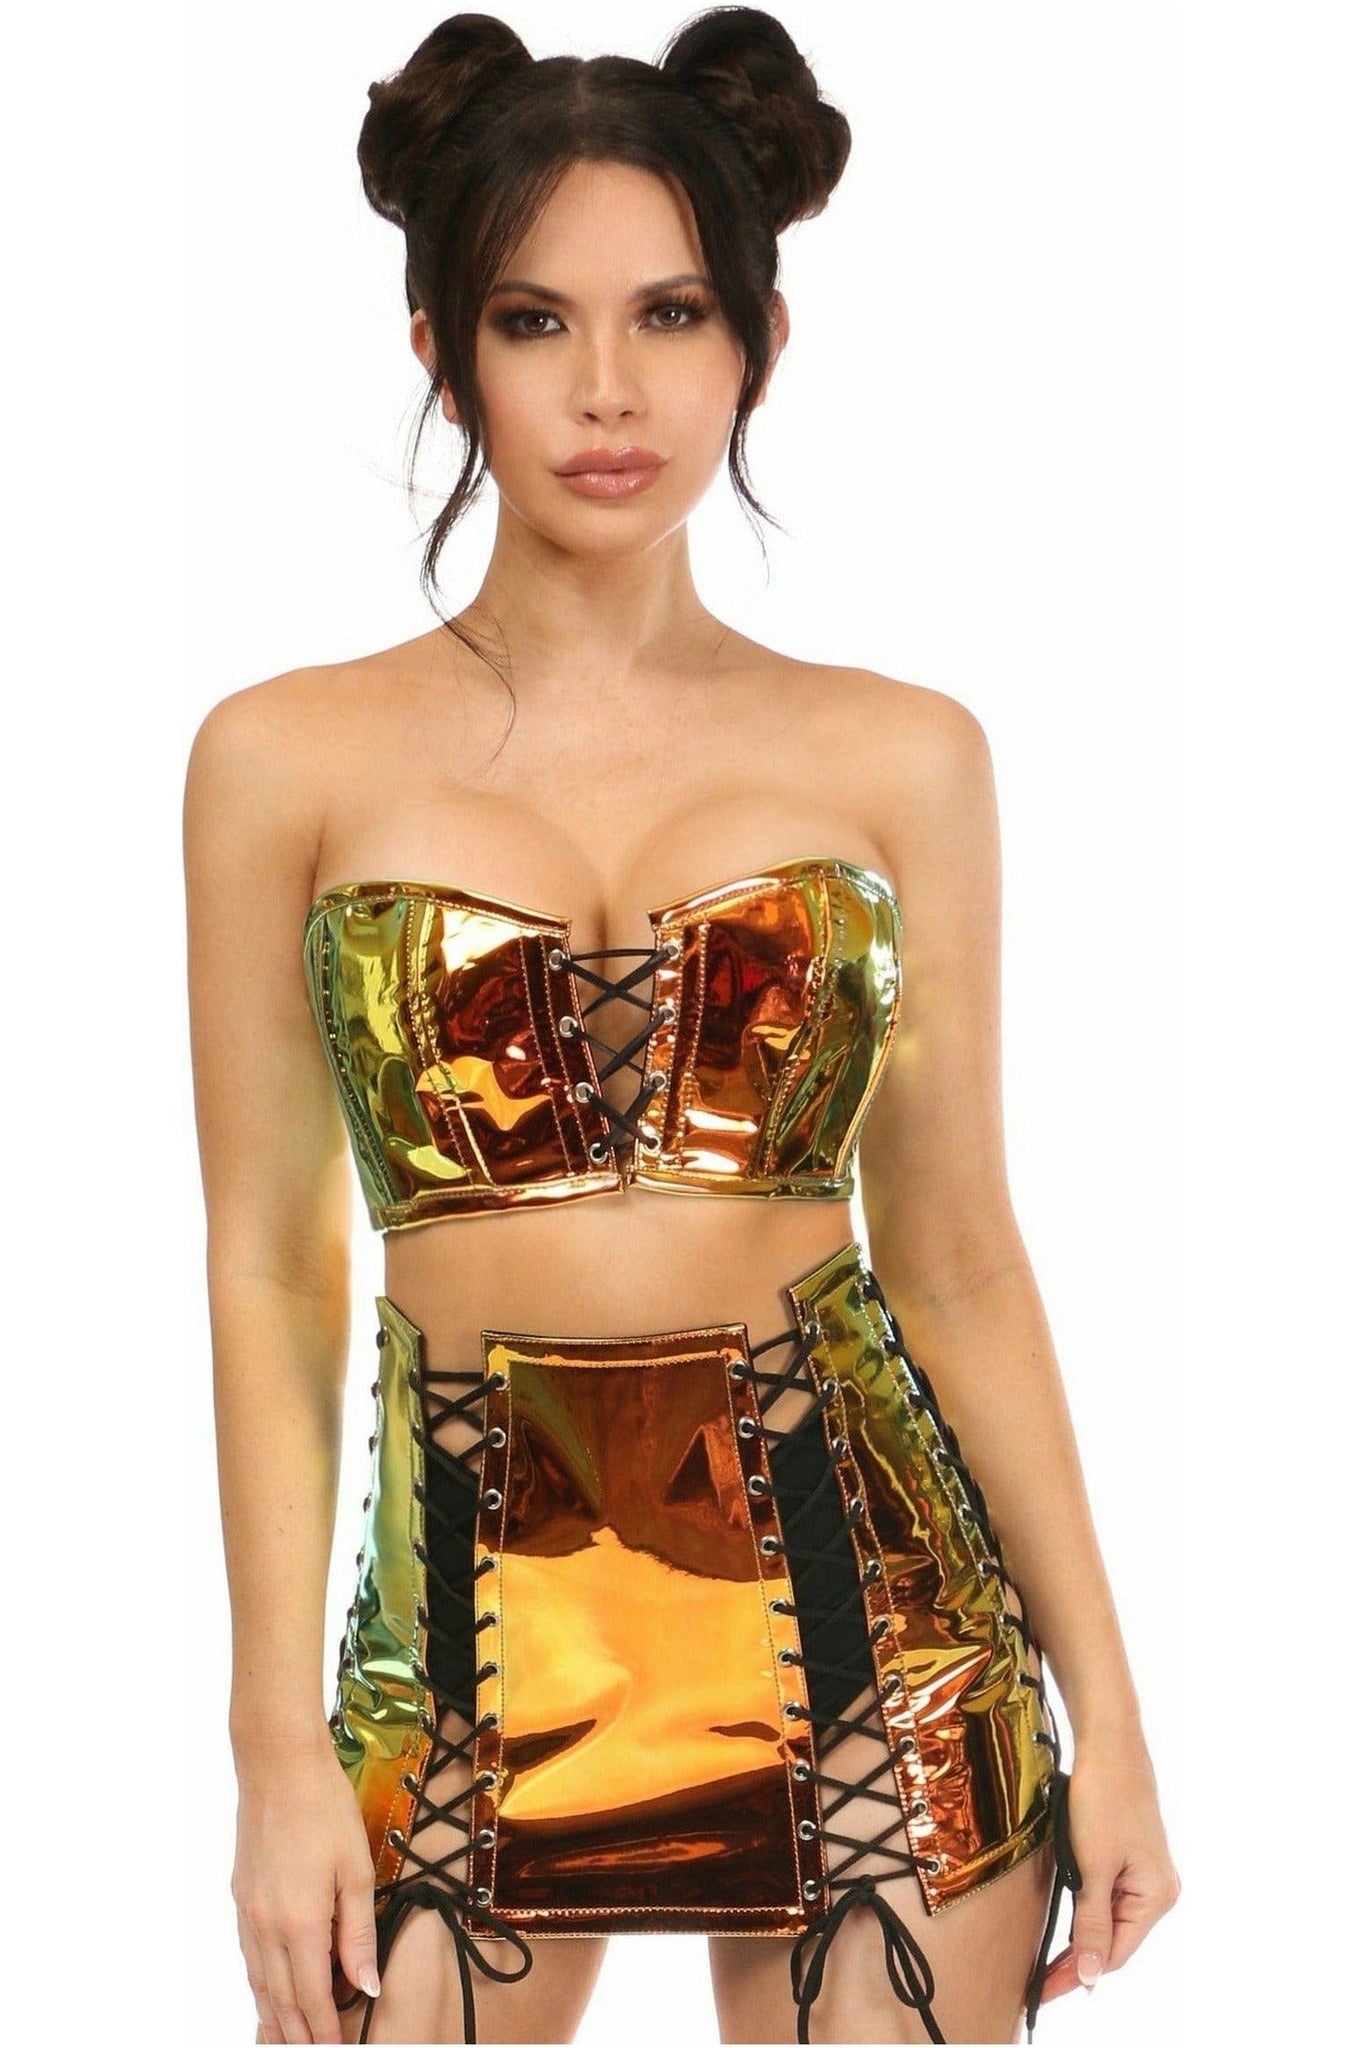 Lavish 2 PC Sunset Holo Bustier & Skirt Set